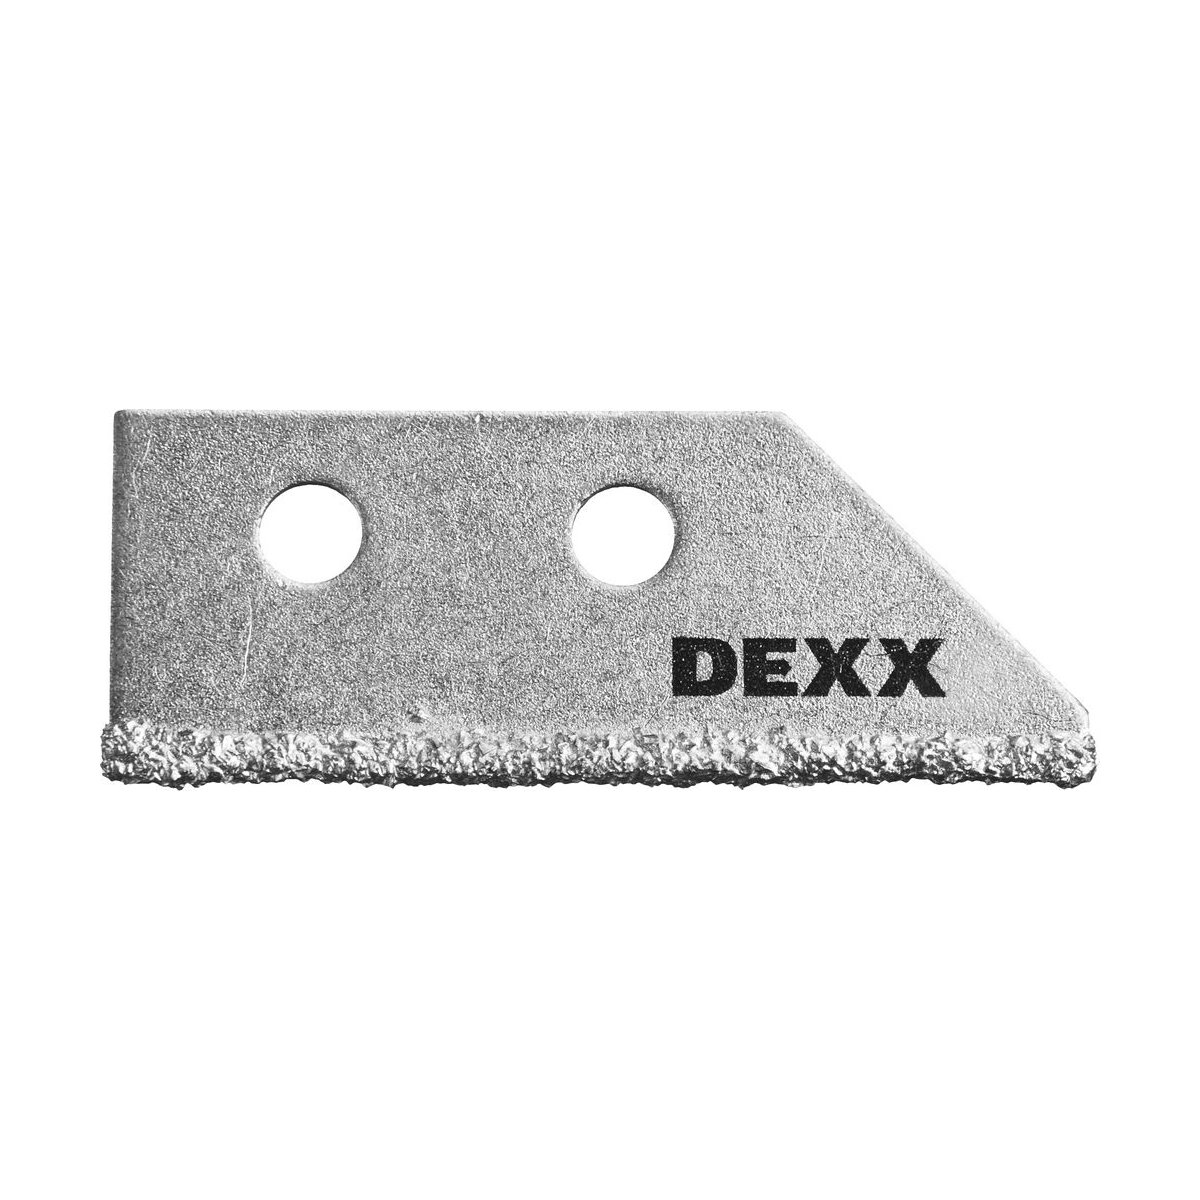 DEXX 50 мм, 1 шт., лезвия для скребка 33413-S1